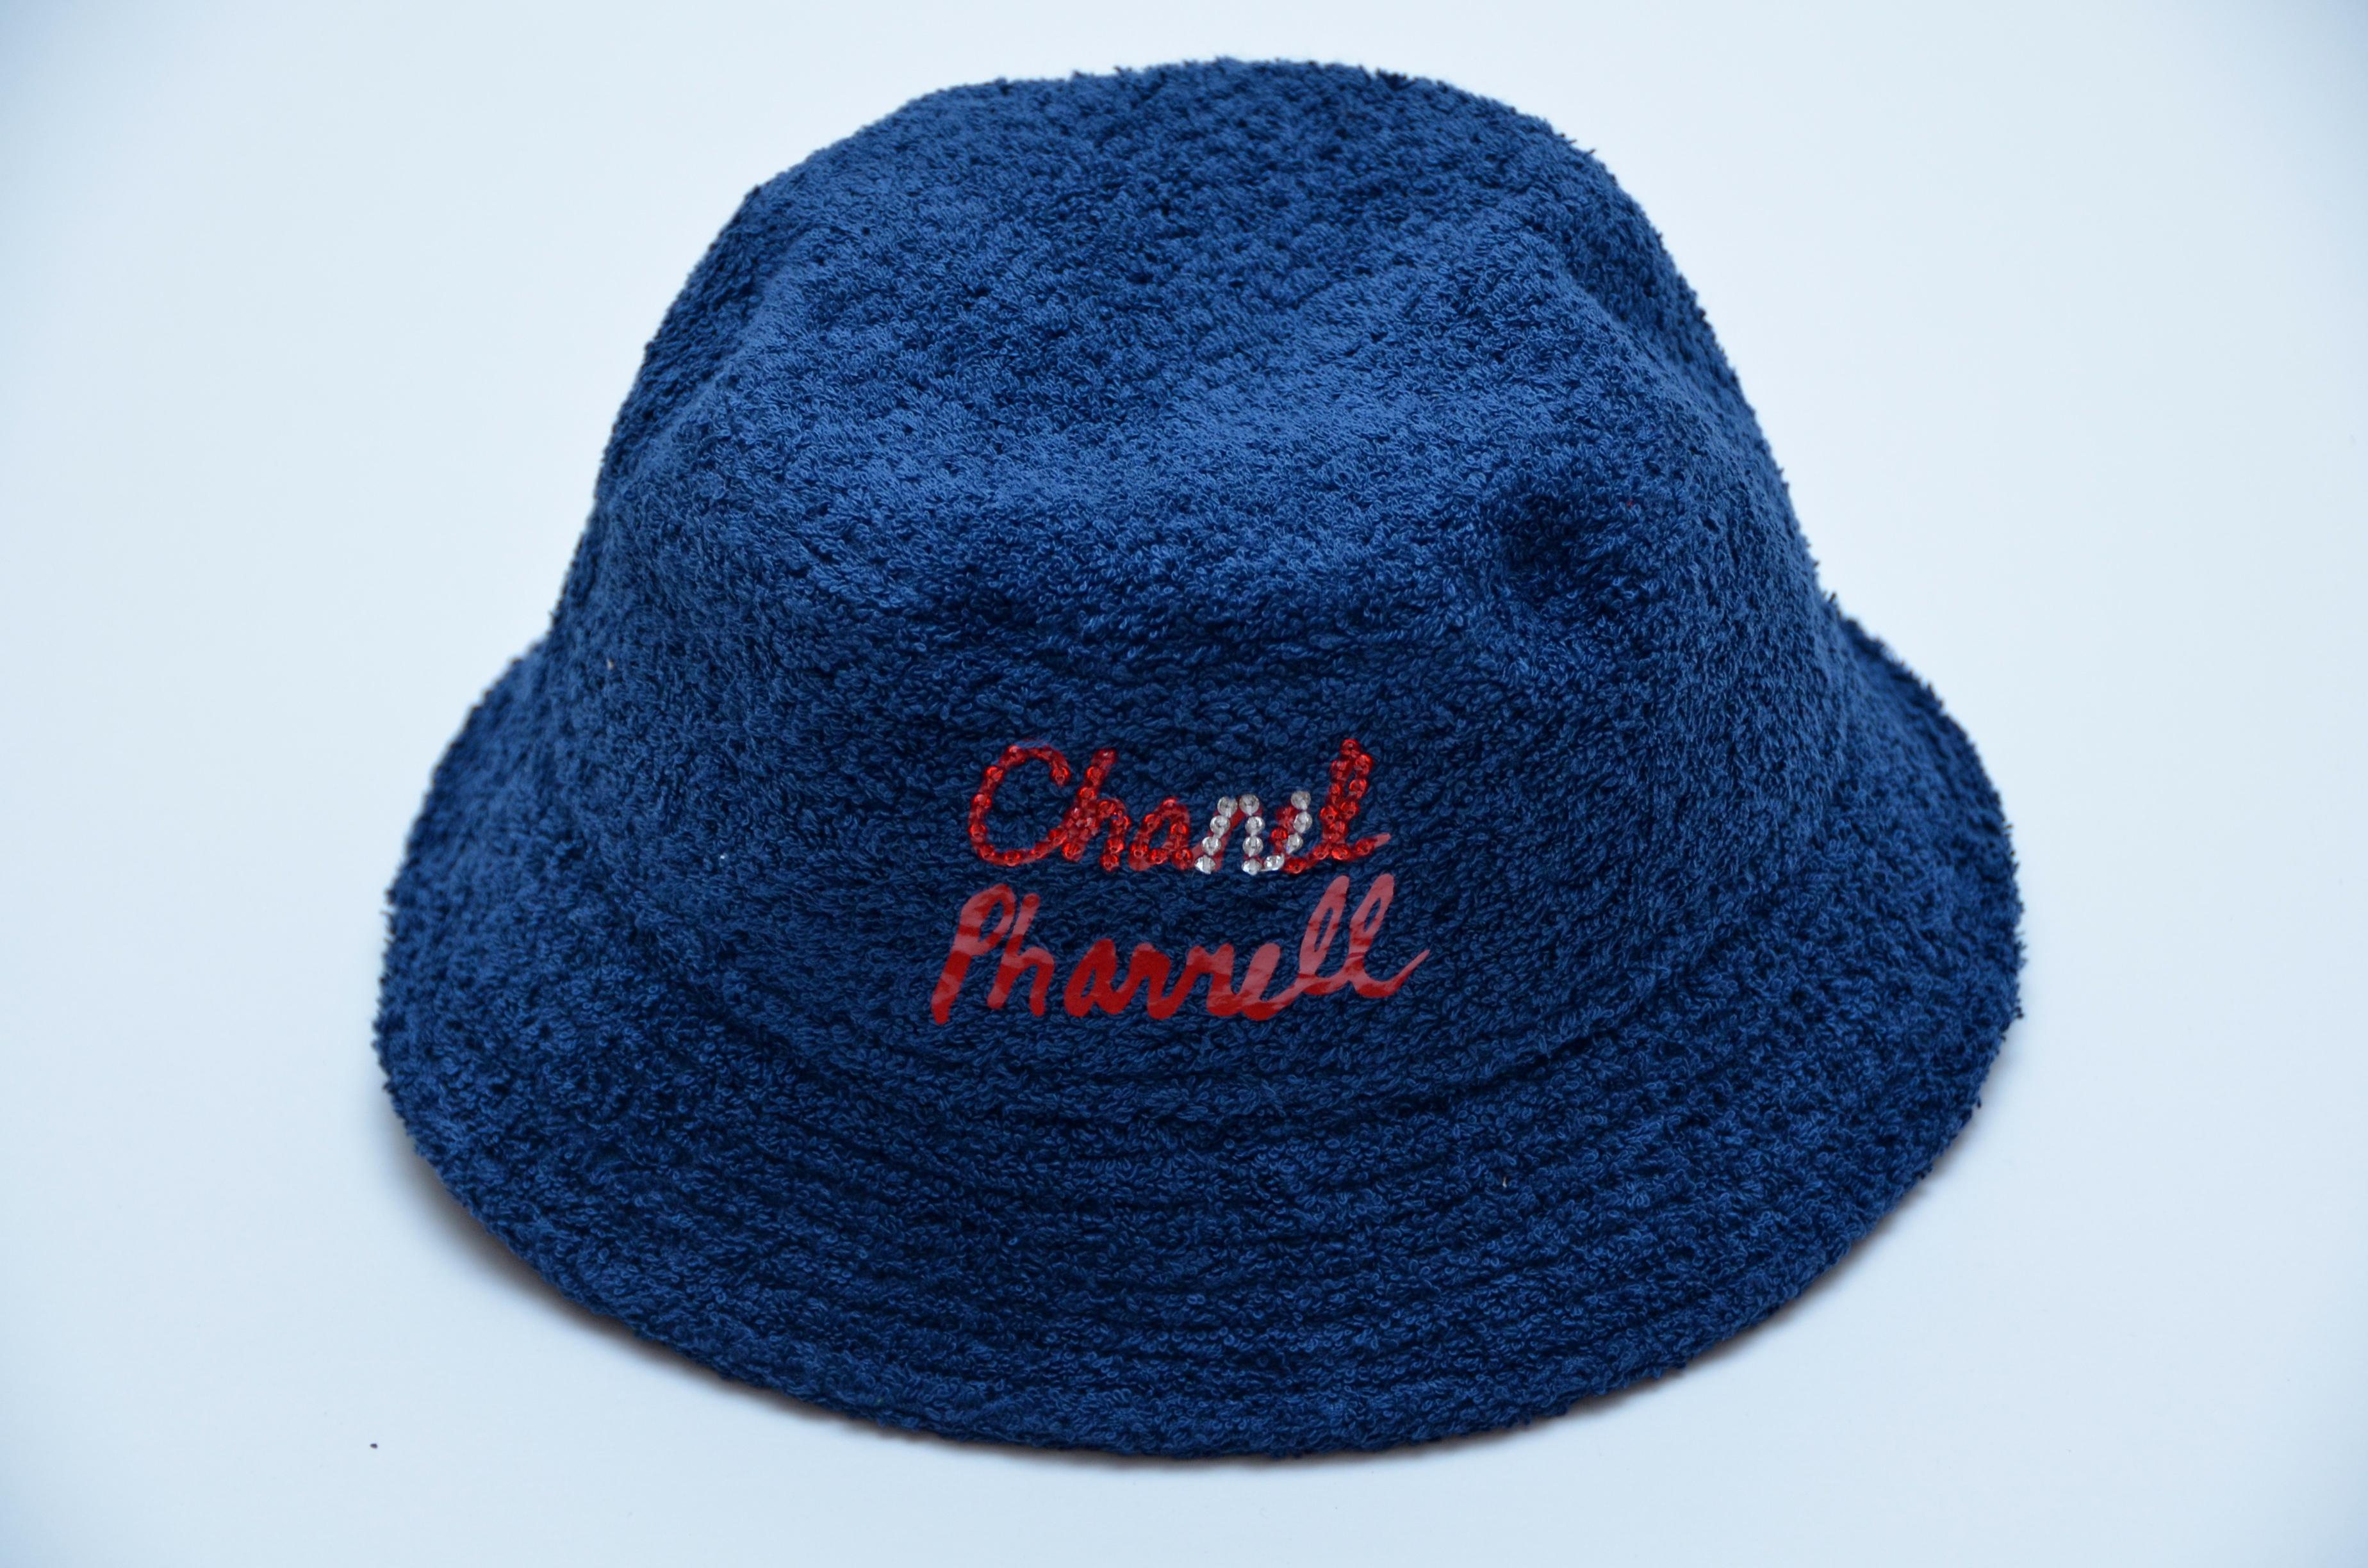 chanel pharrell bucket hat